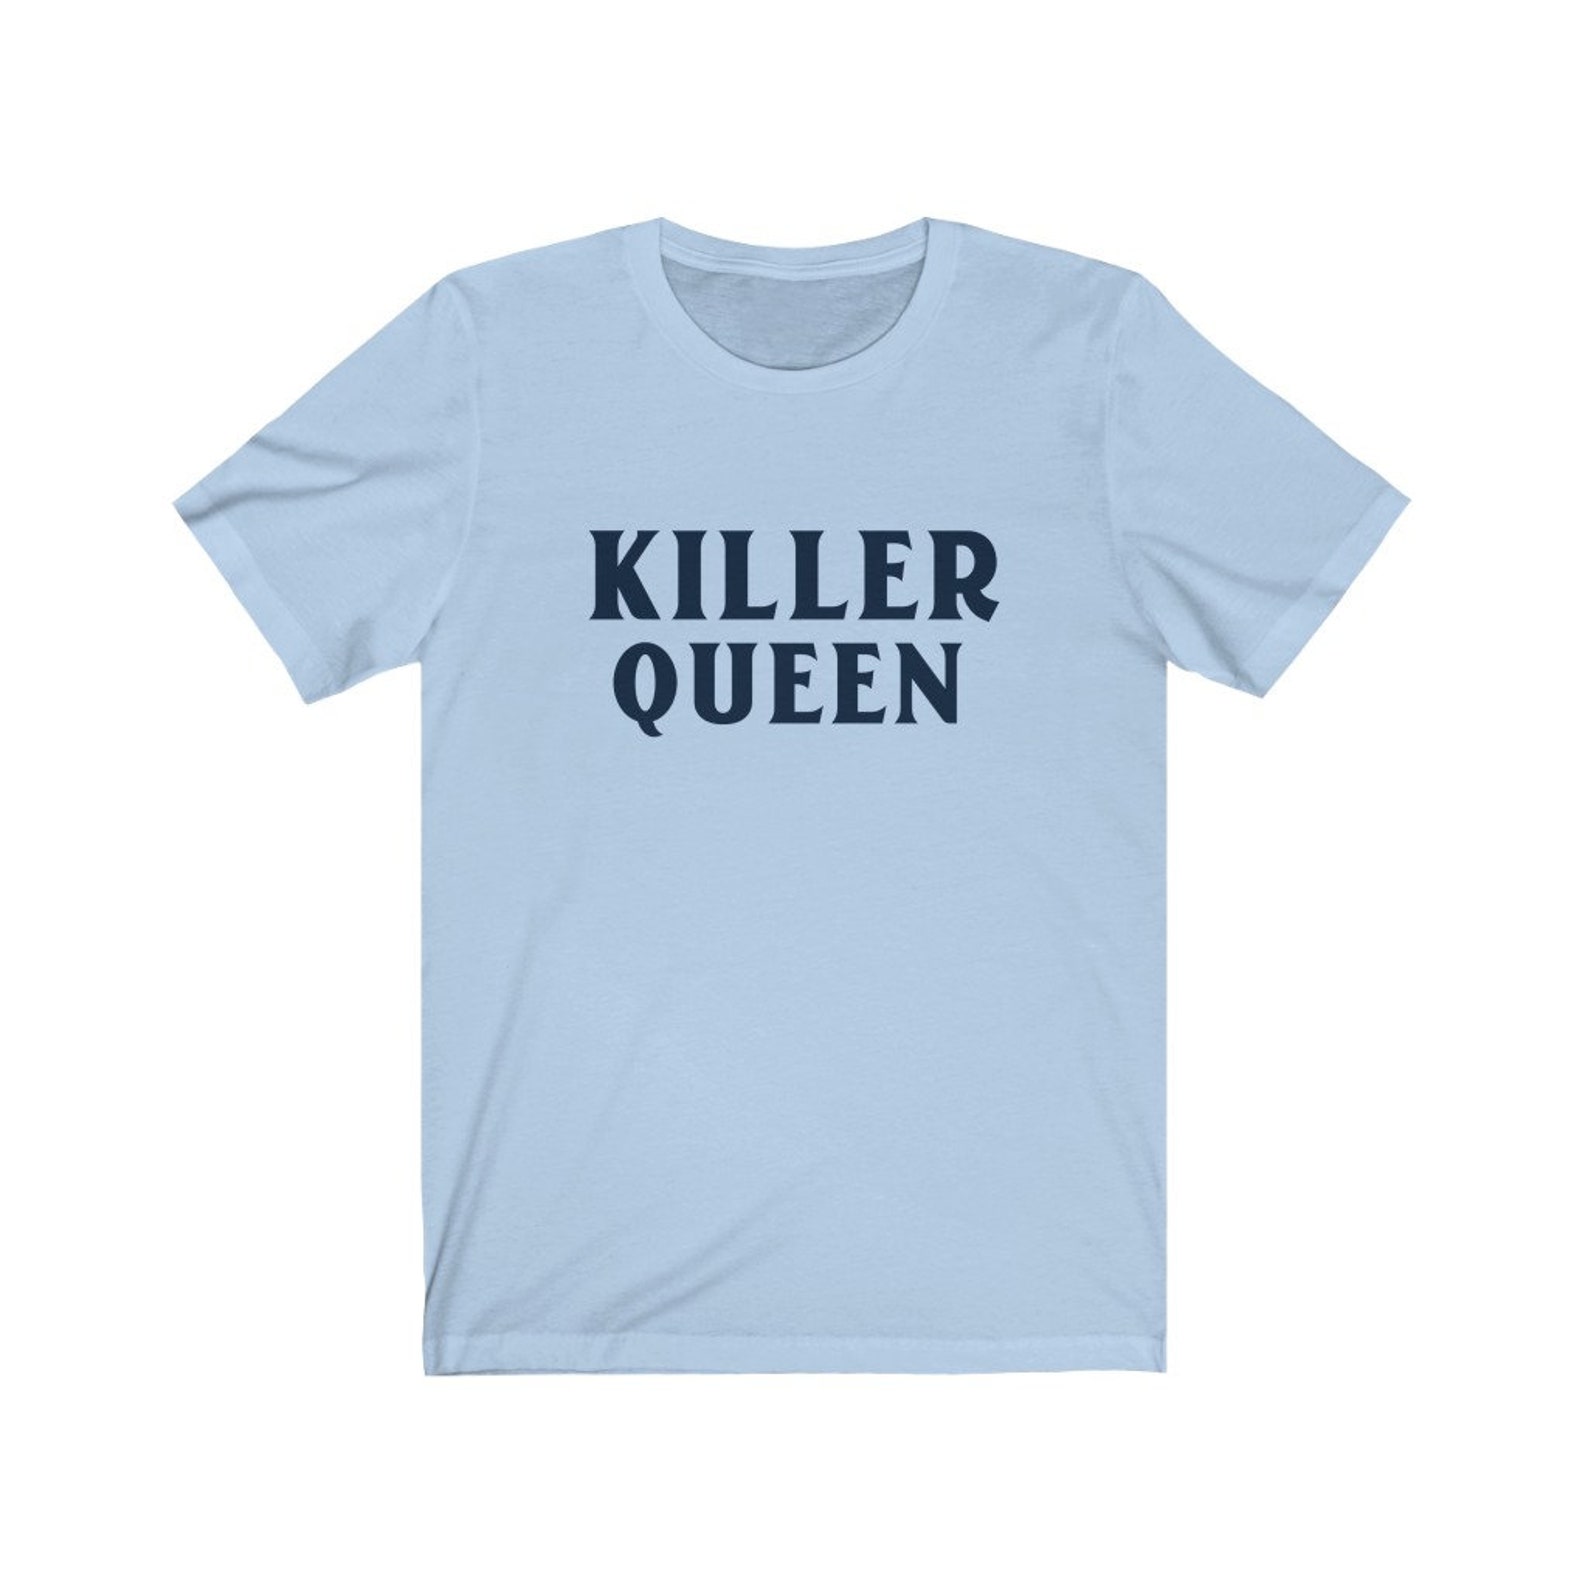 Killer Queen shirt Ladies shirt Girls tshirt Girl Power | Etsy